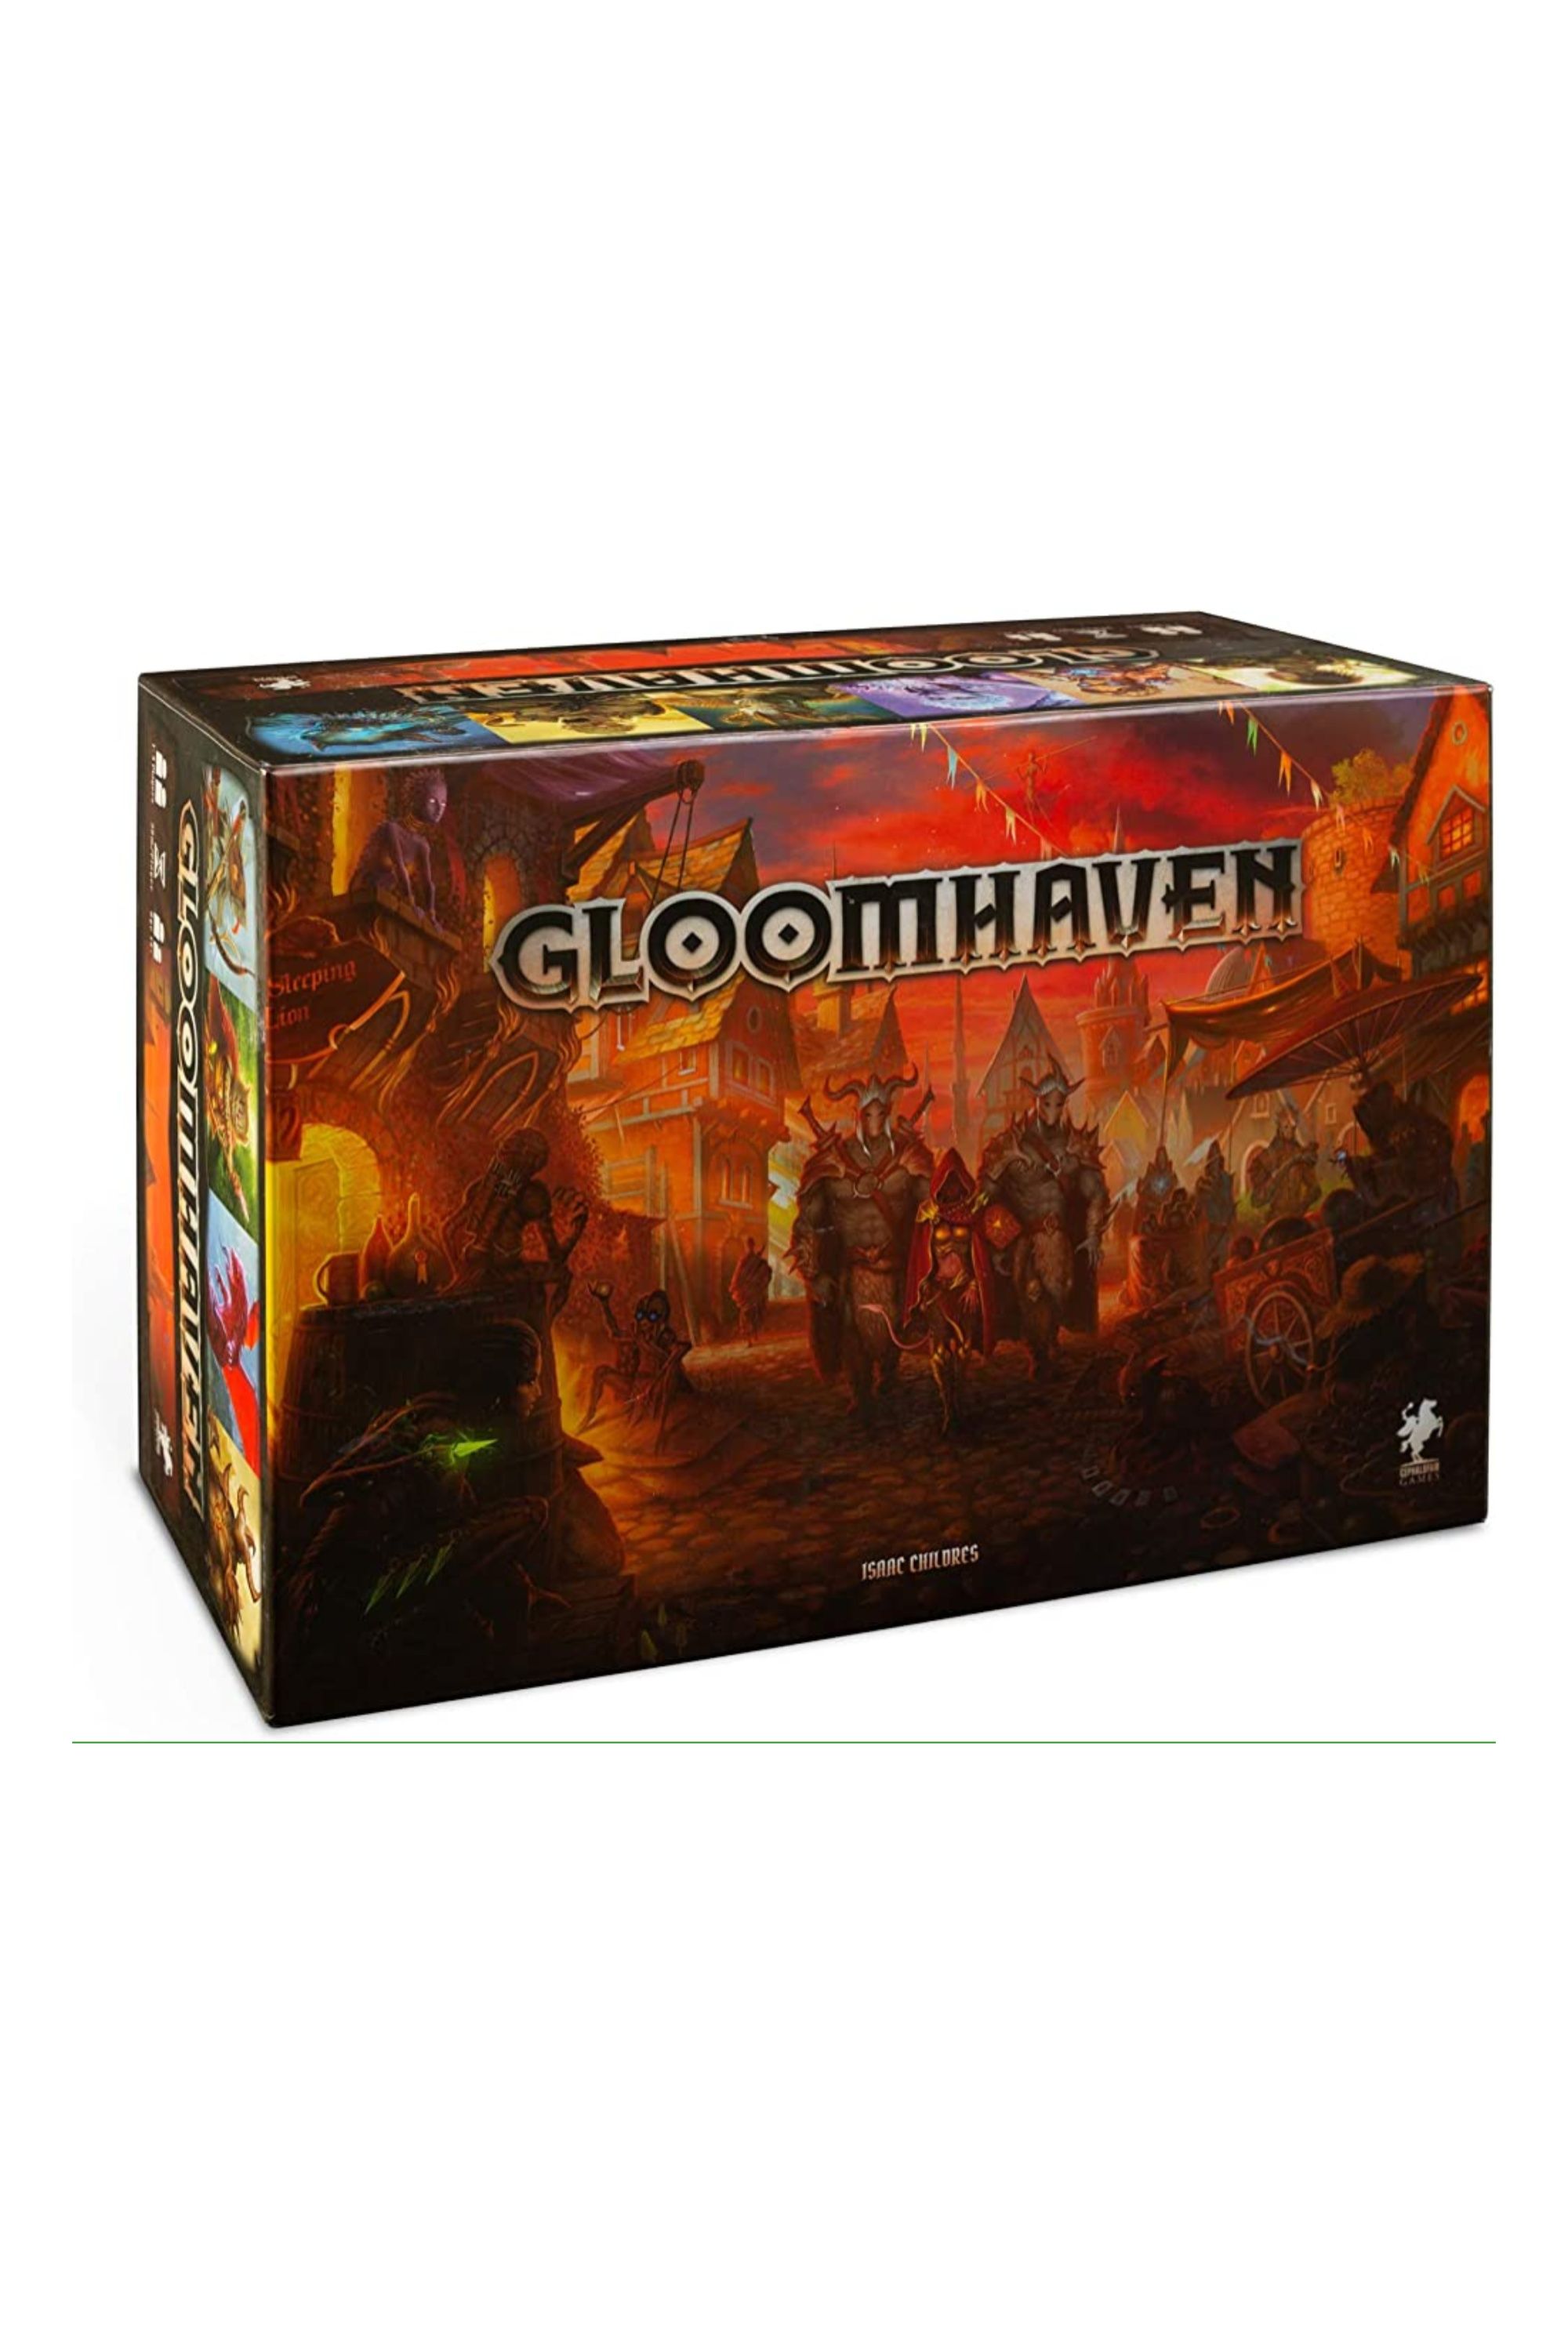 Gloomhaven board game box